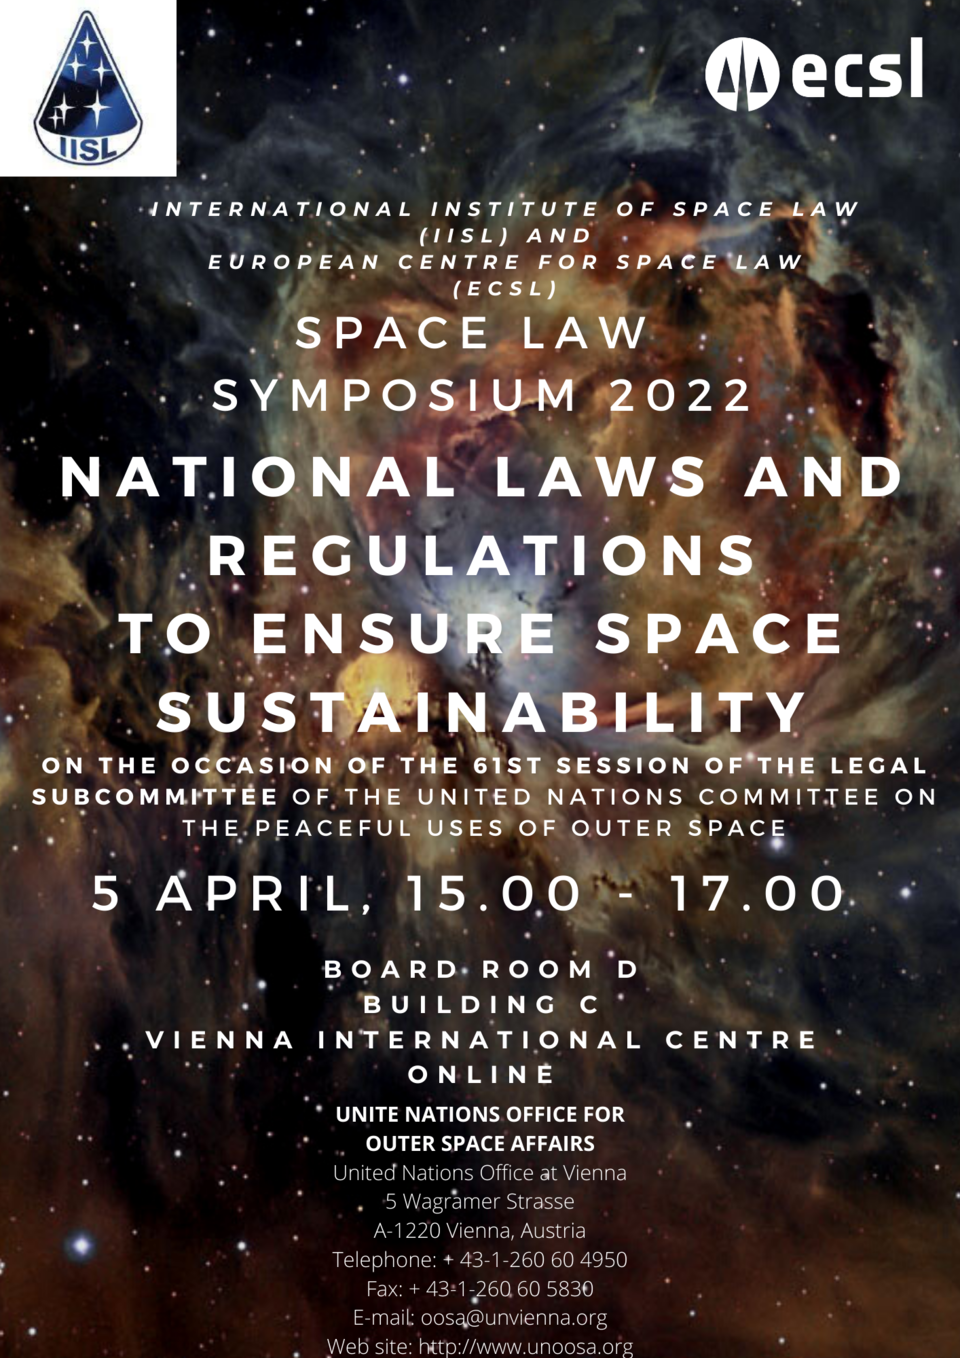 IISL/ECSL Symposium 2022